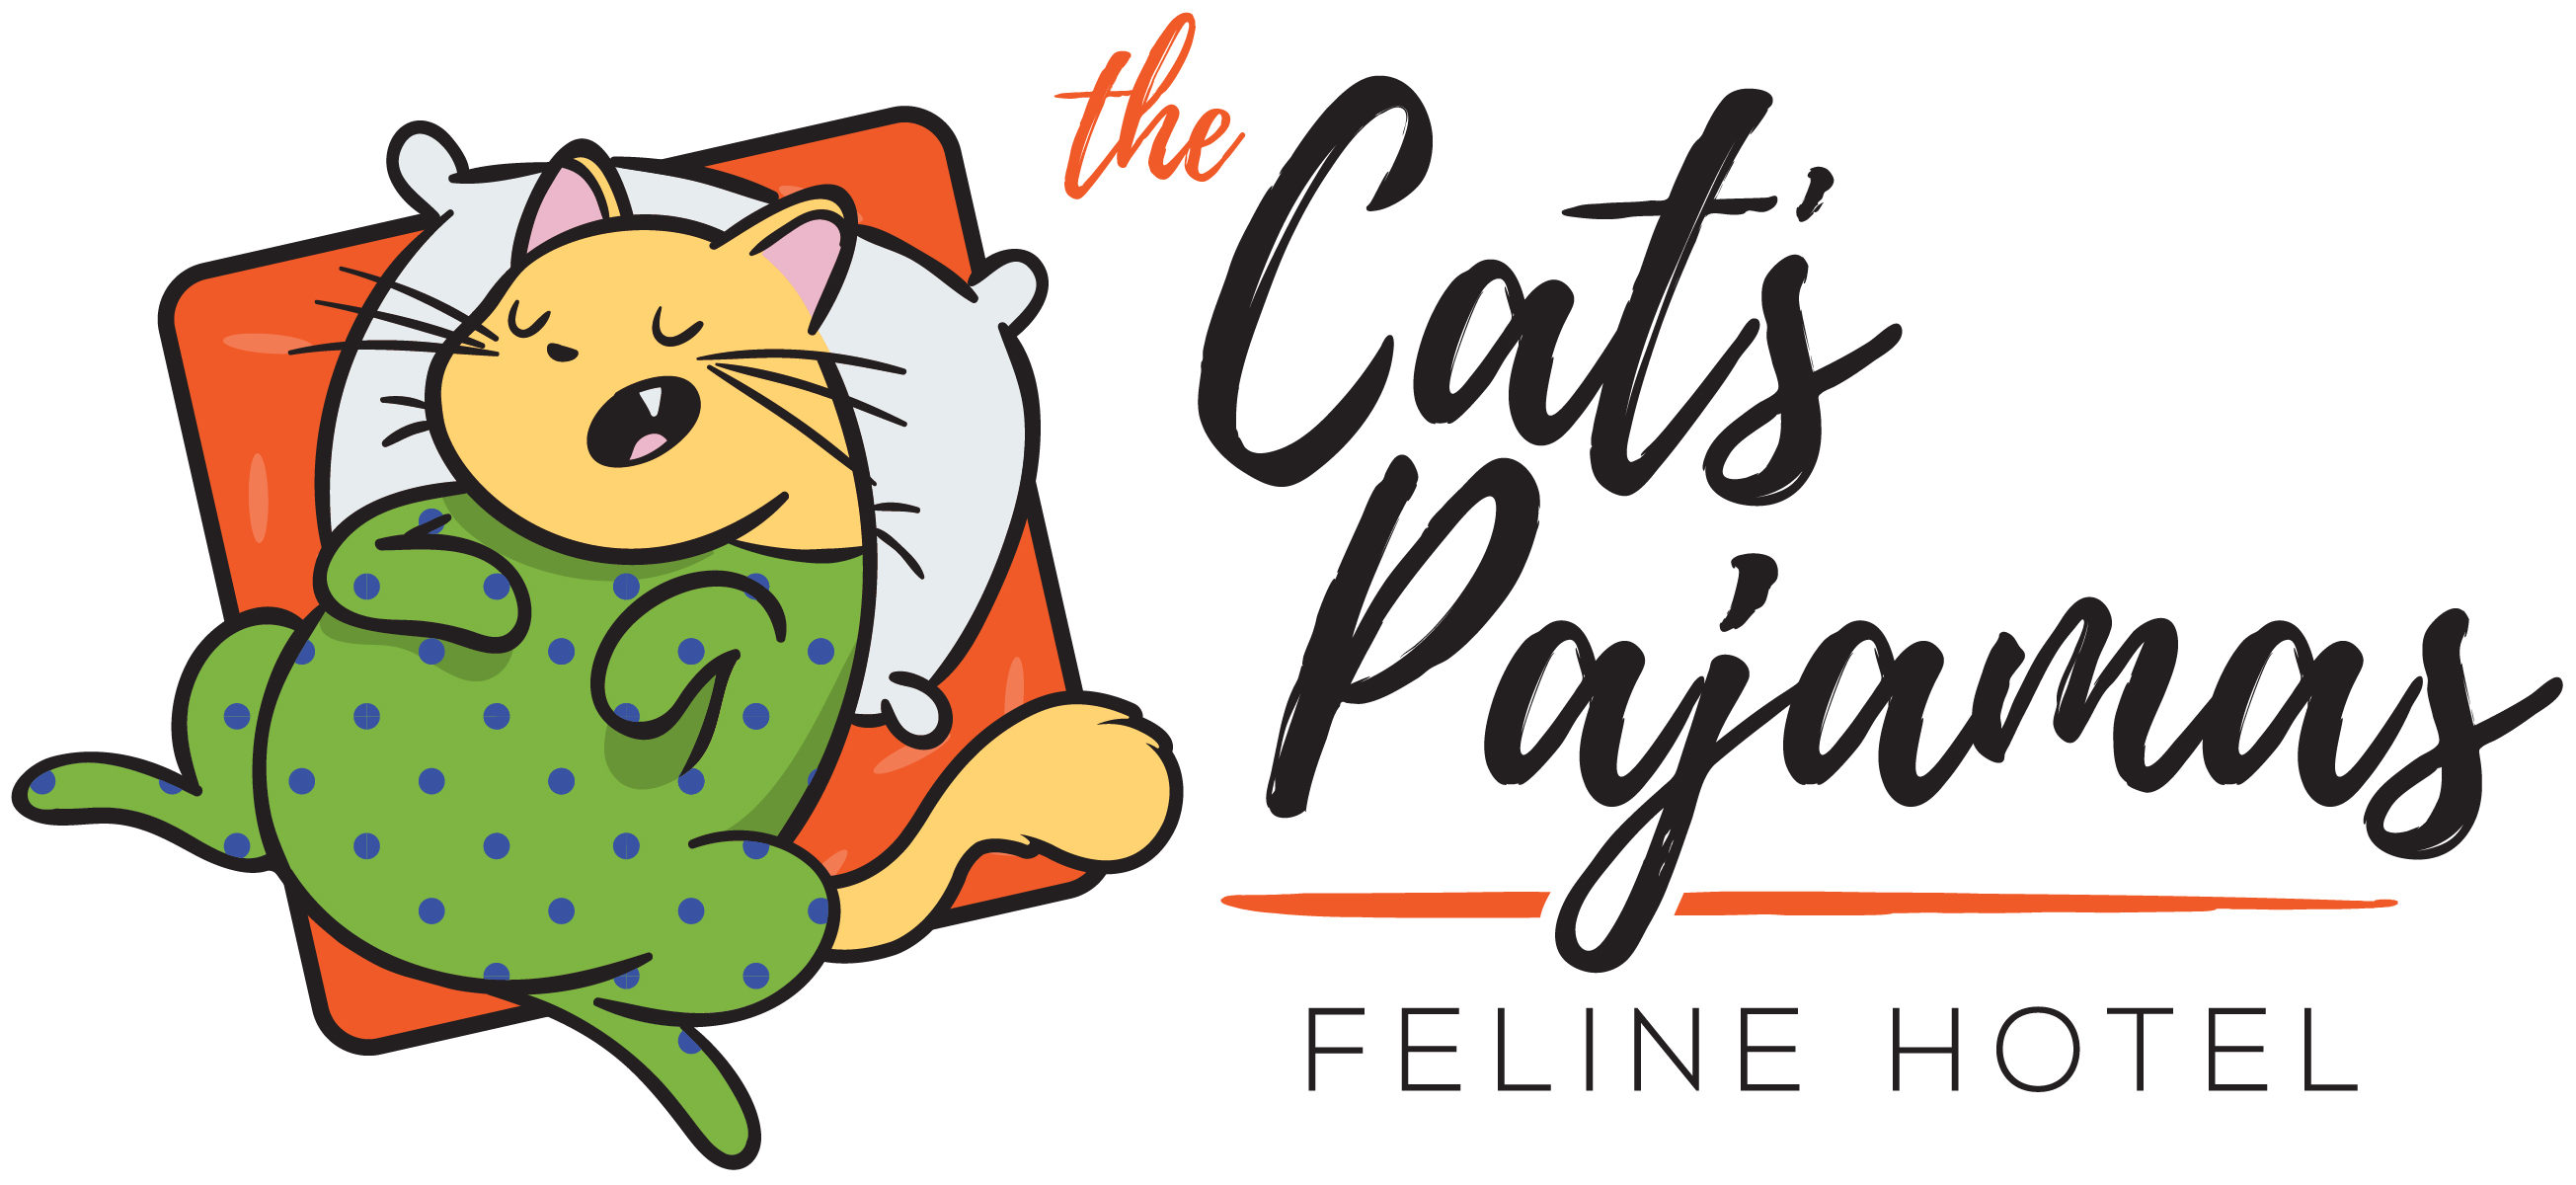 The Cat's Pajamas Feline Hotel – Cat Hotel, Cat Boarding